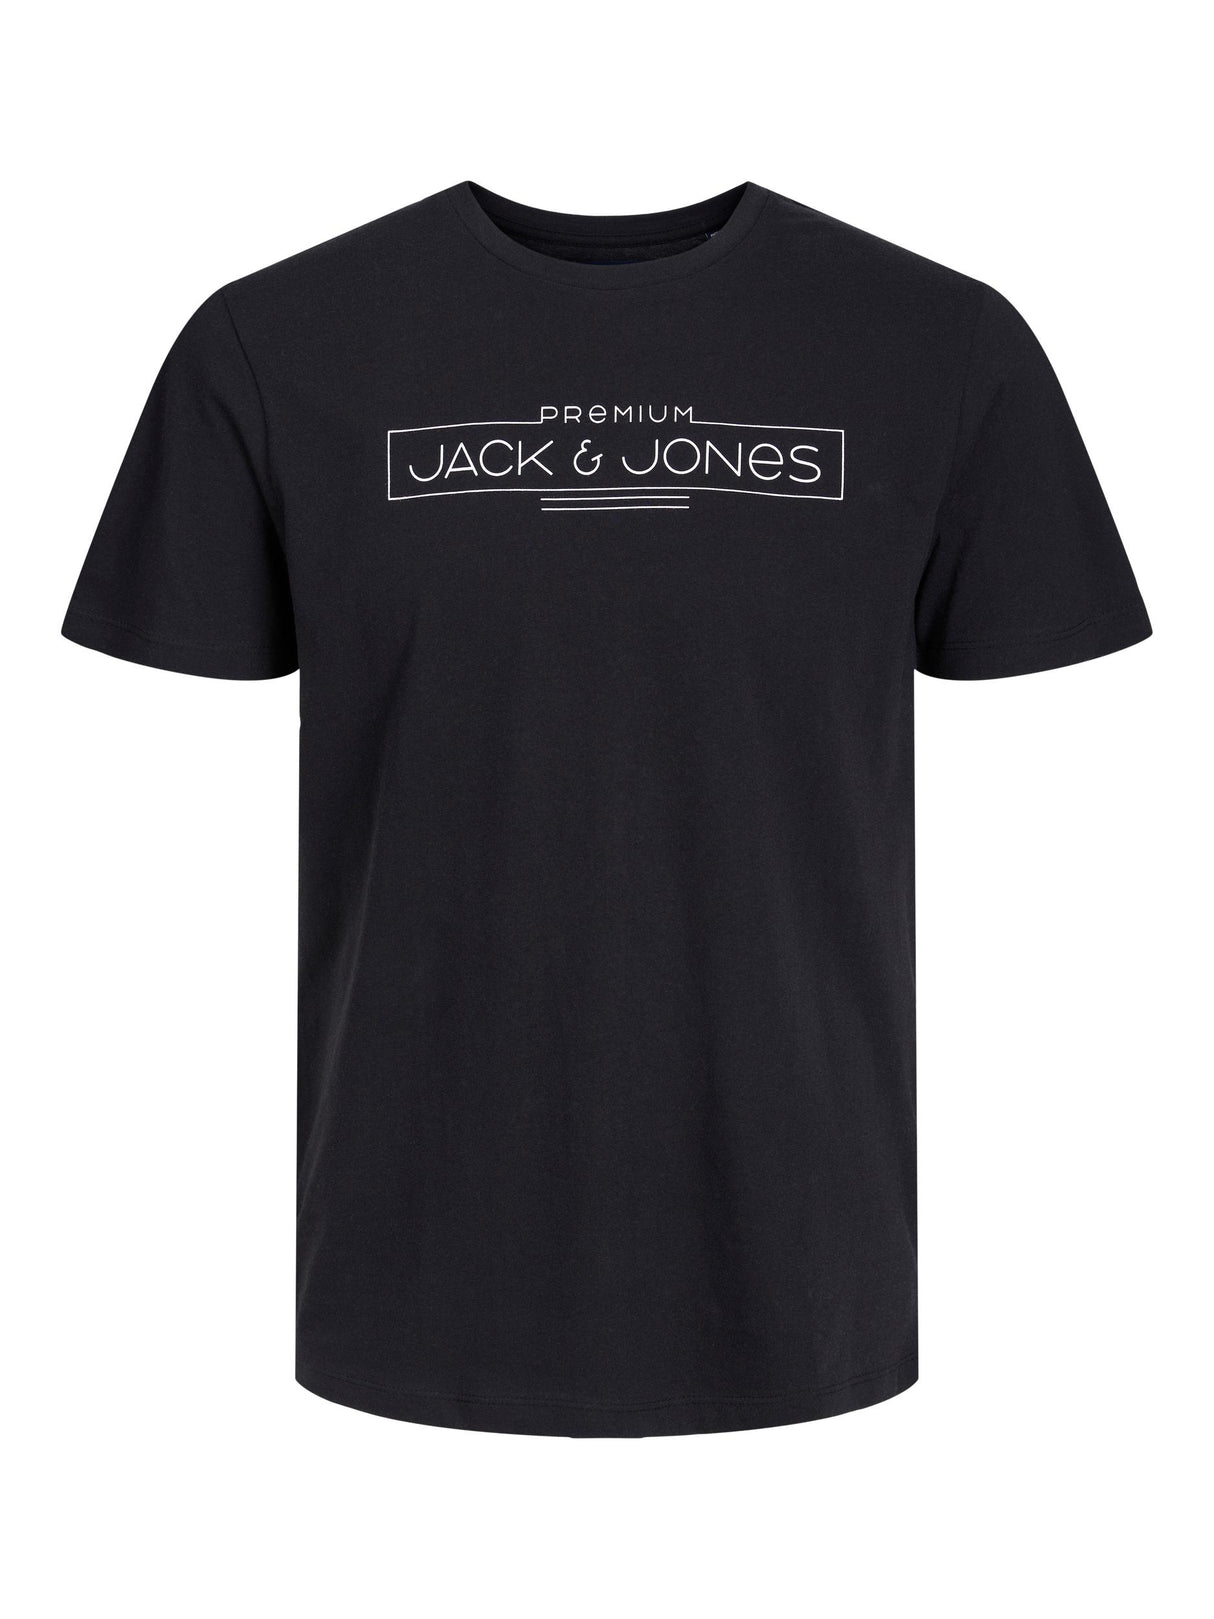 Jack & Jones Booster Logo Black Tee Black